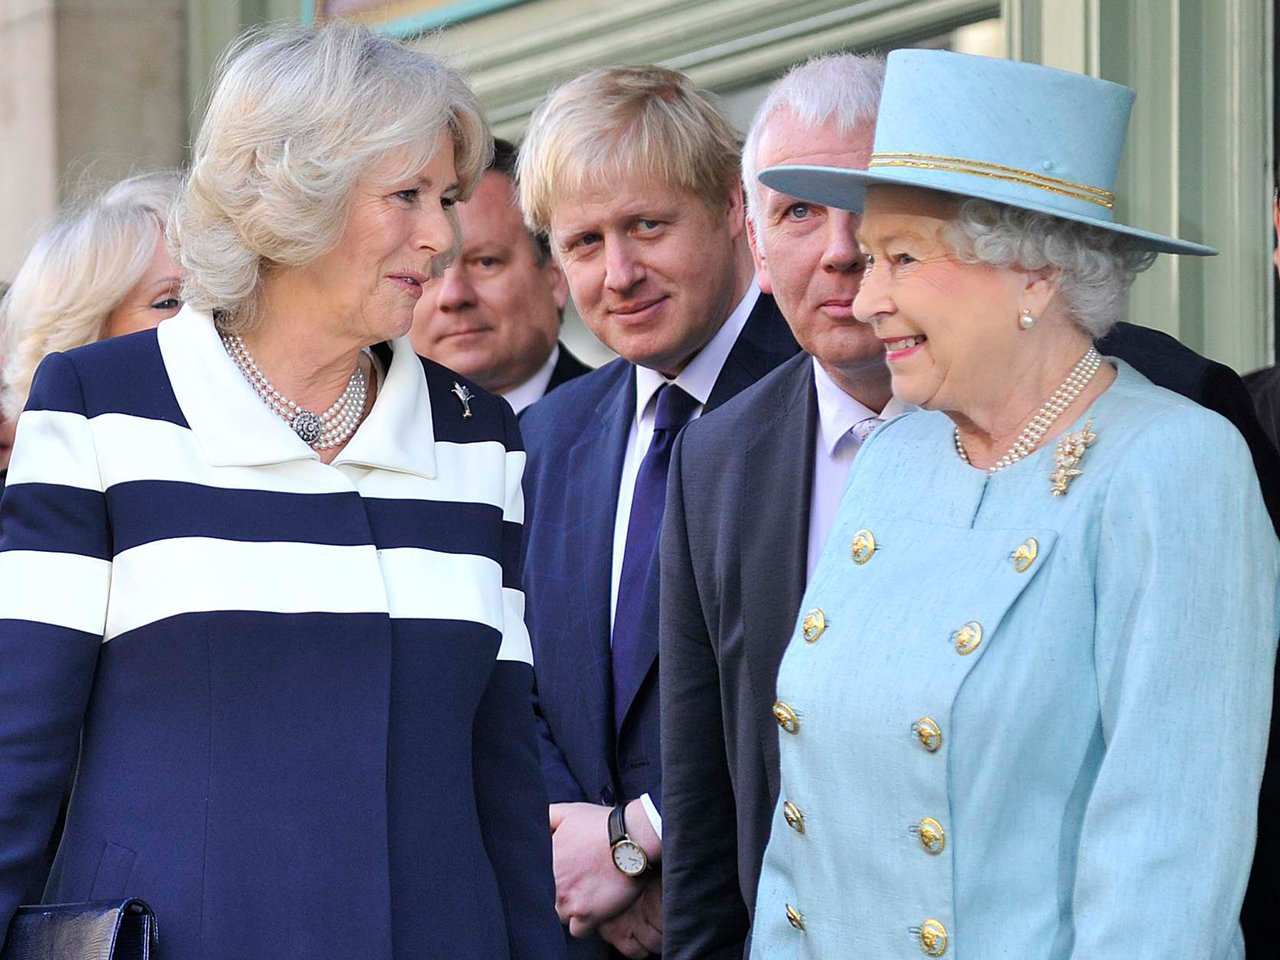 Queen Elizabeth II grants Camilla new honor - CBS News